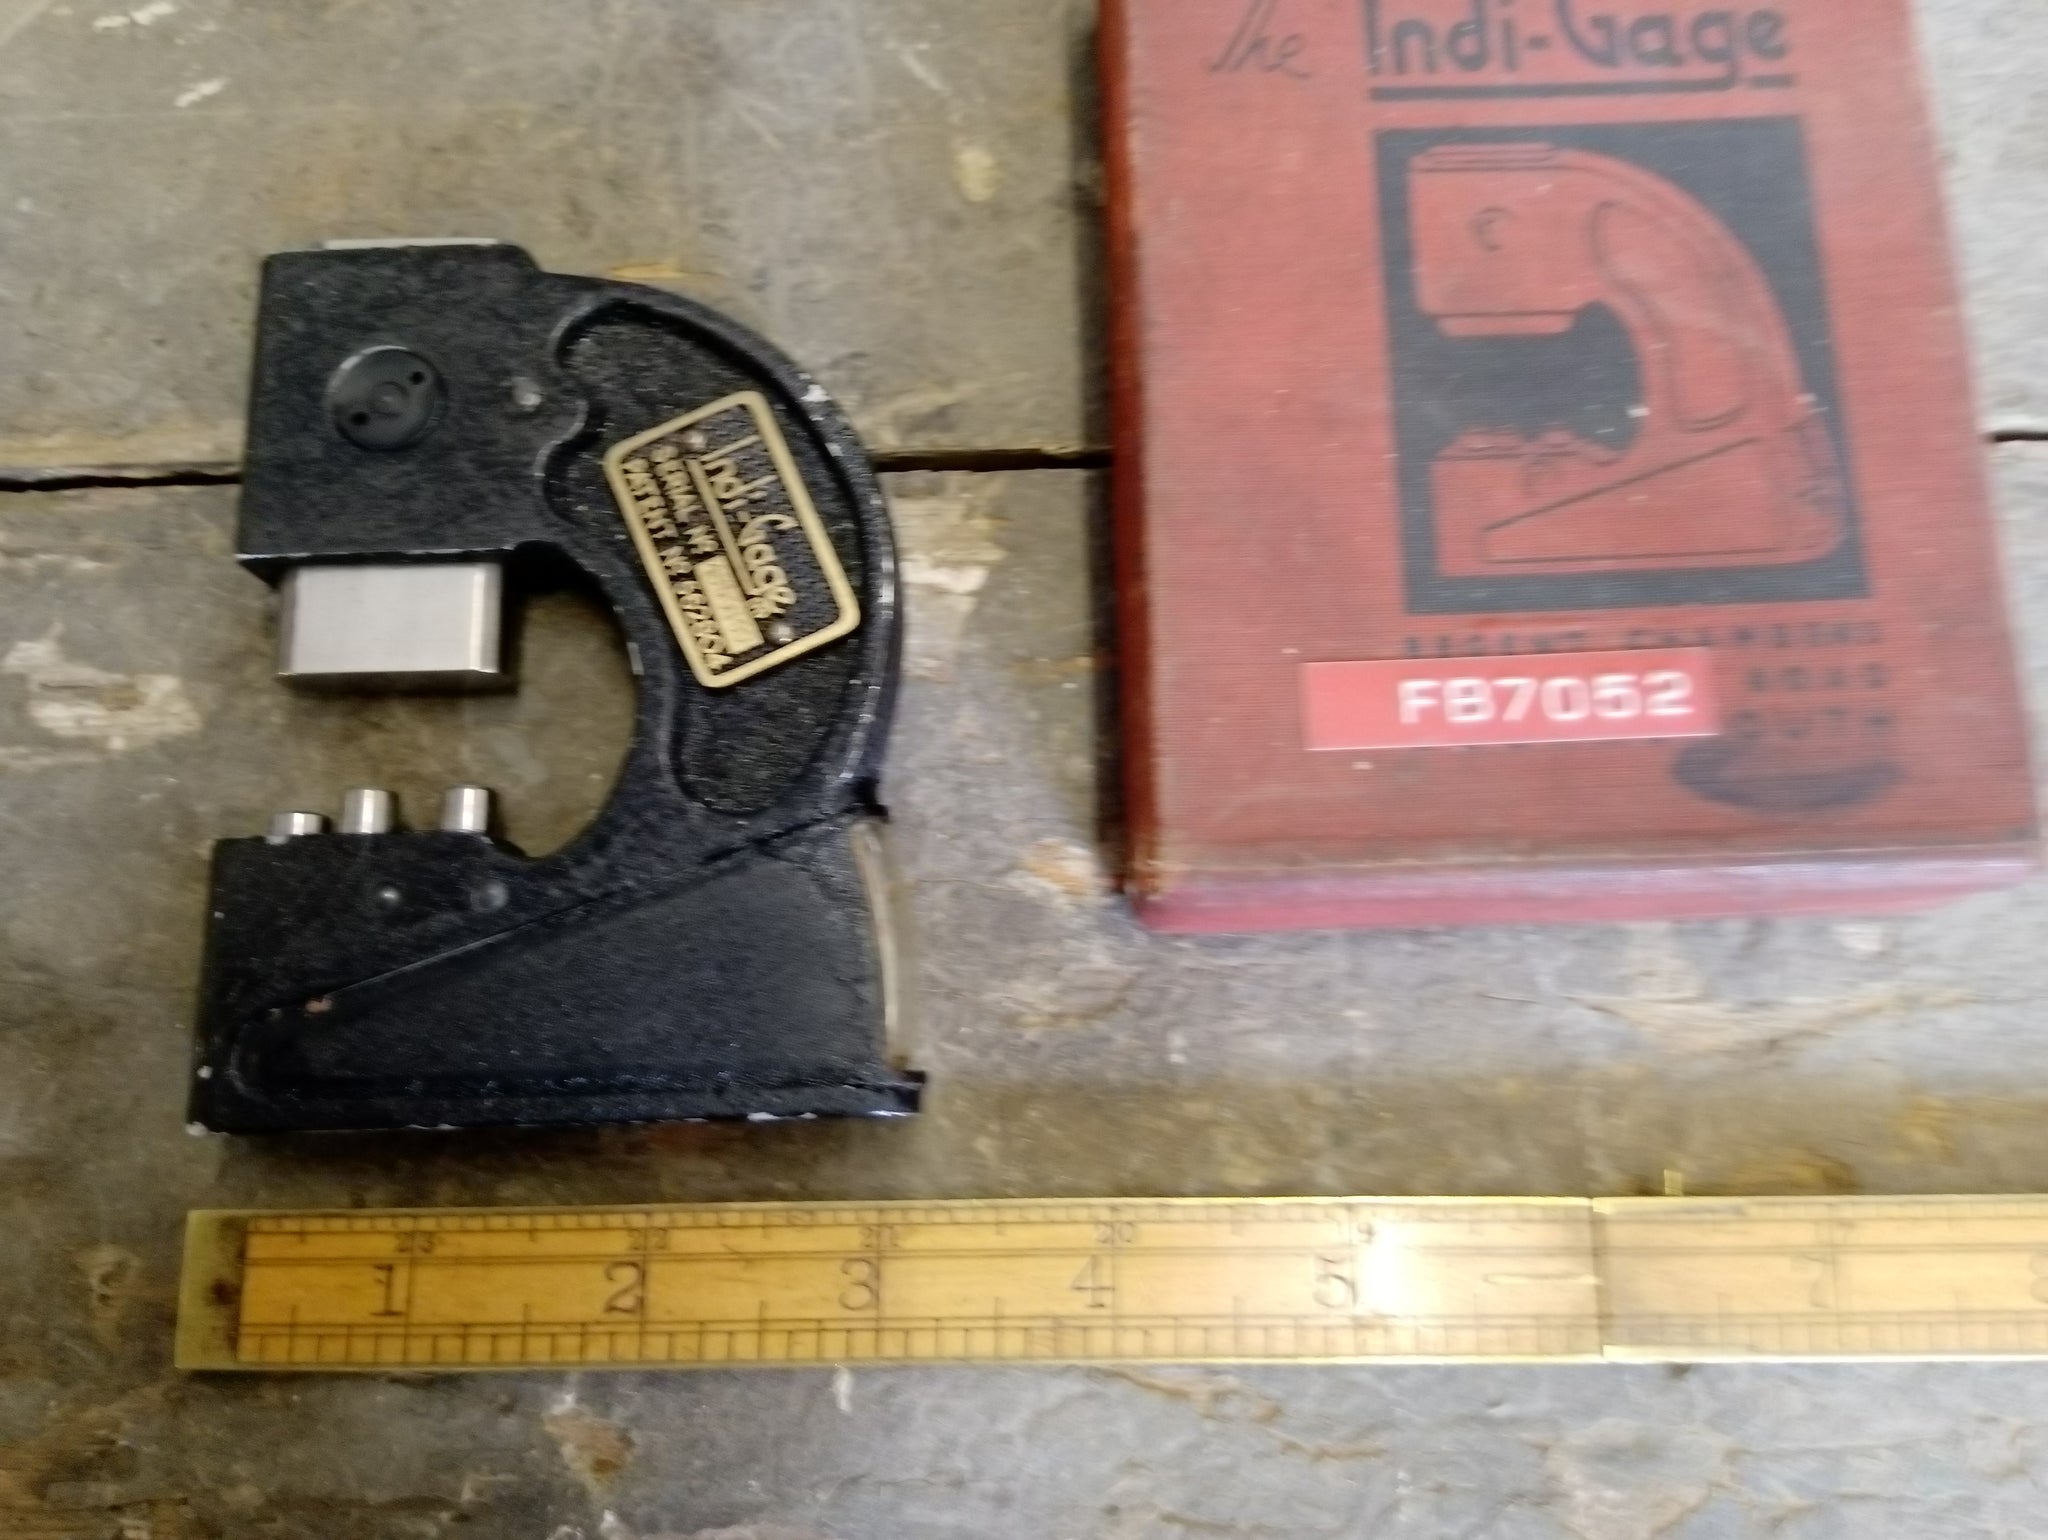 Indi Gage Dimension Checking Caliper Original Box VGC 18454-The Vintage Tool Shop